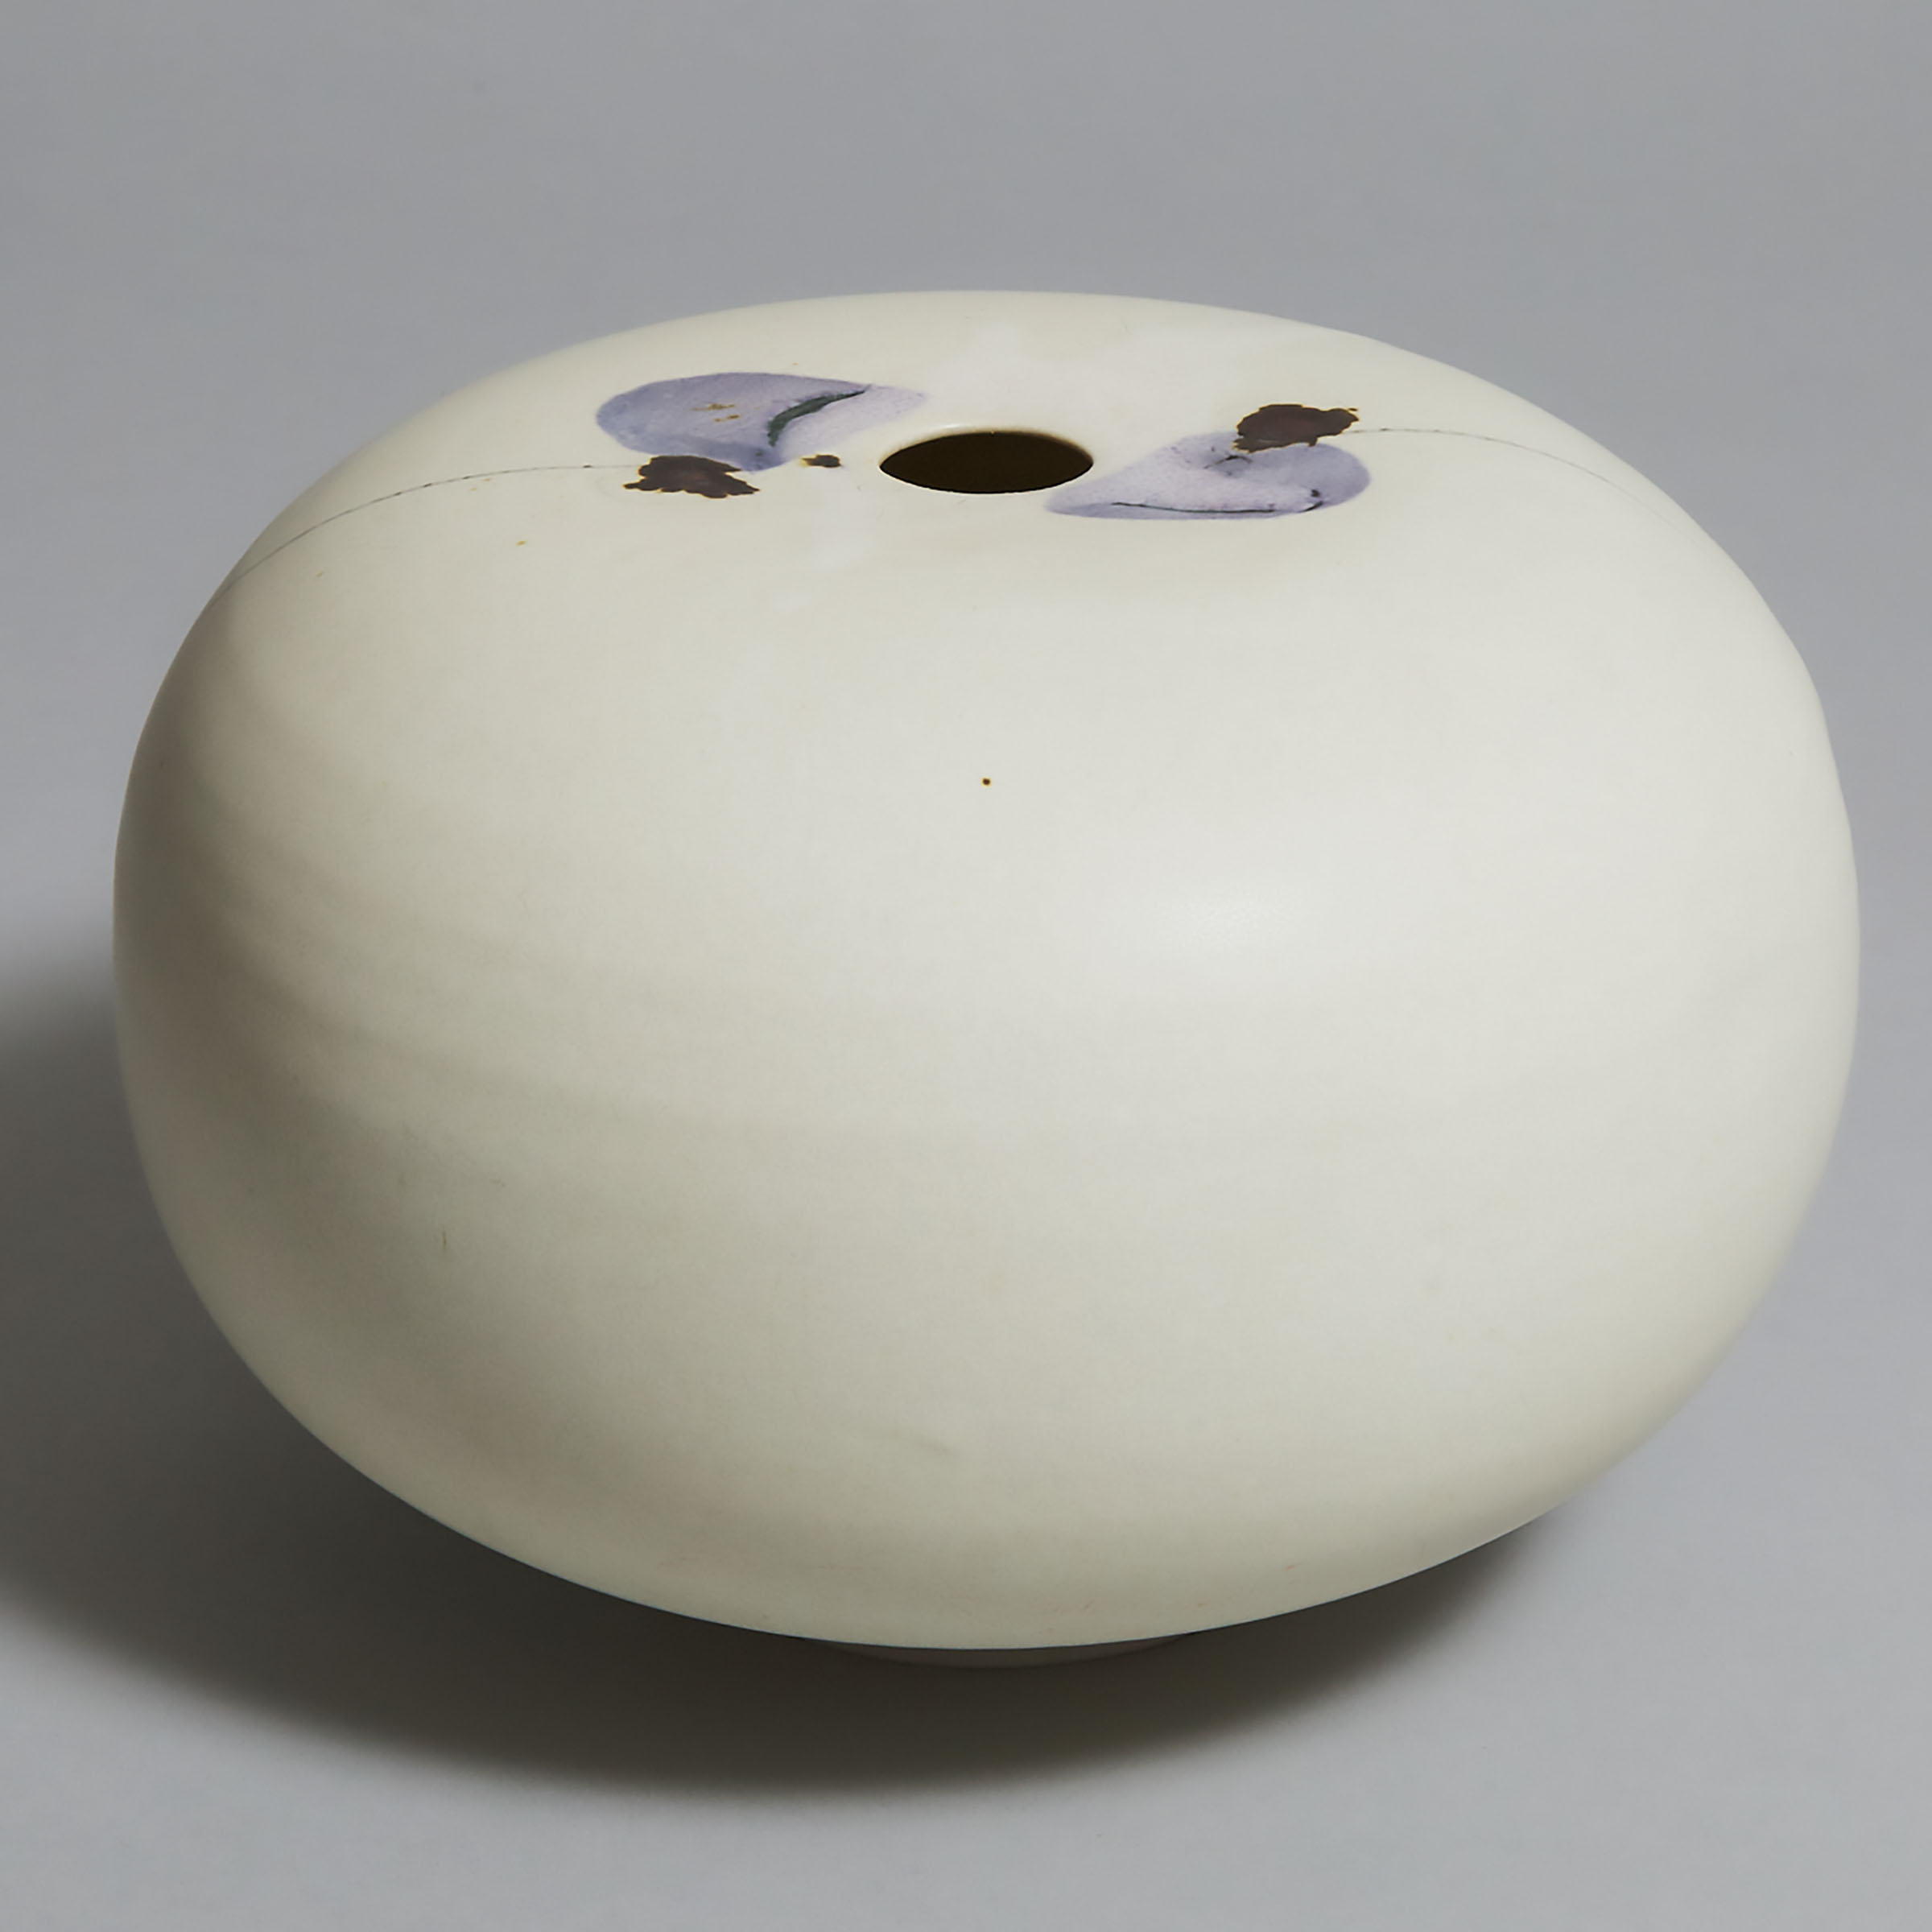 Kayo O'Young (Canadian, b.1950), Squat Vase, 1988